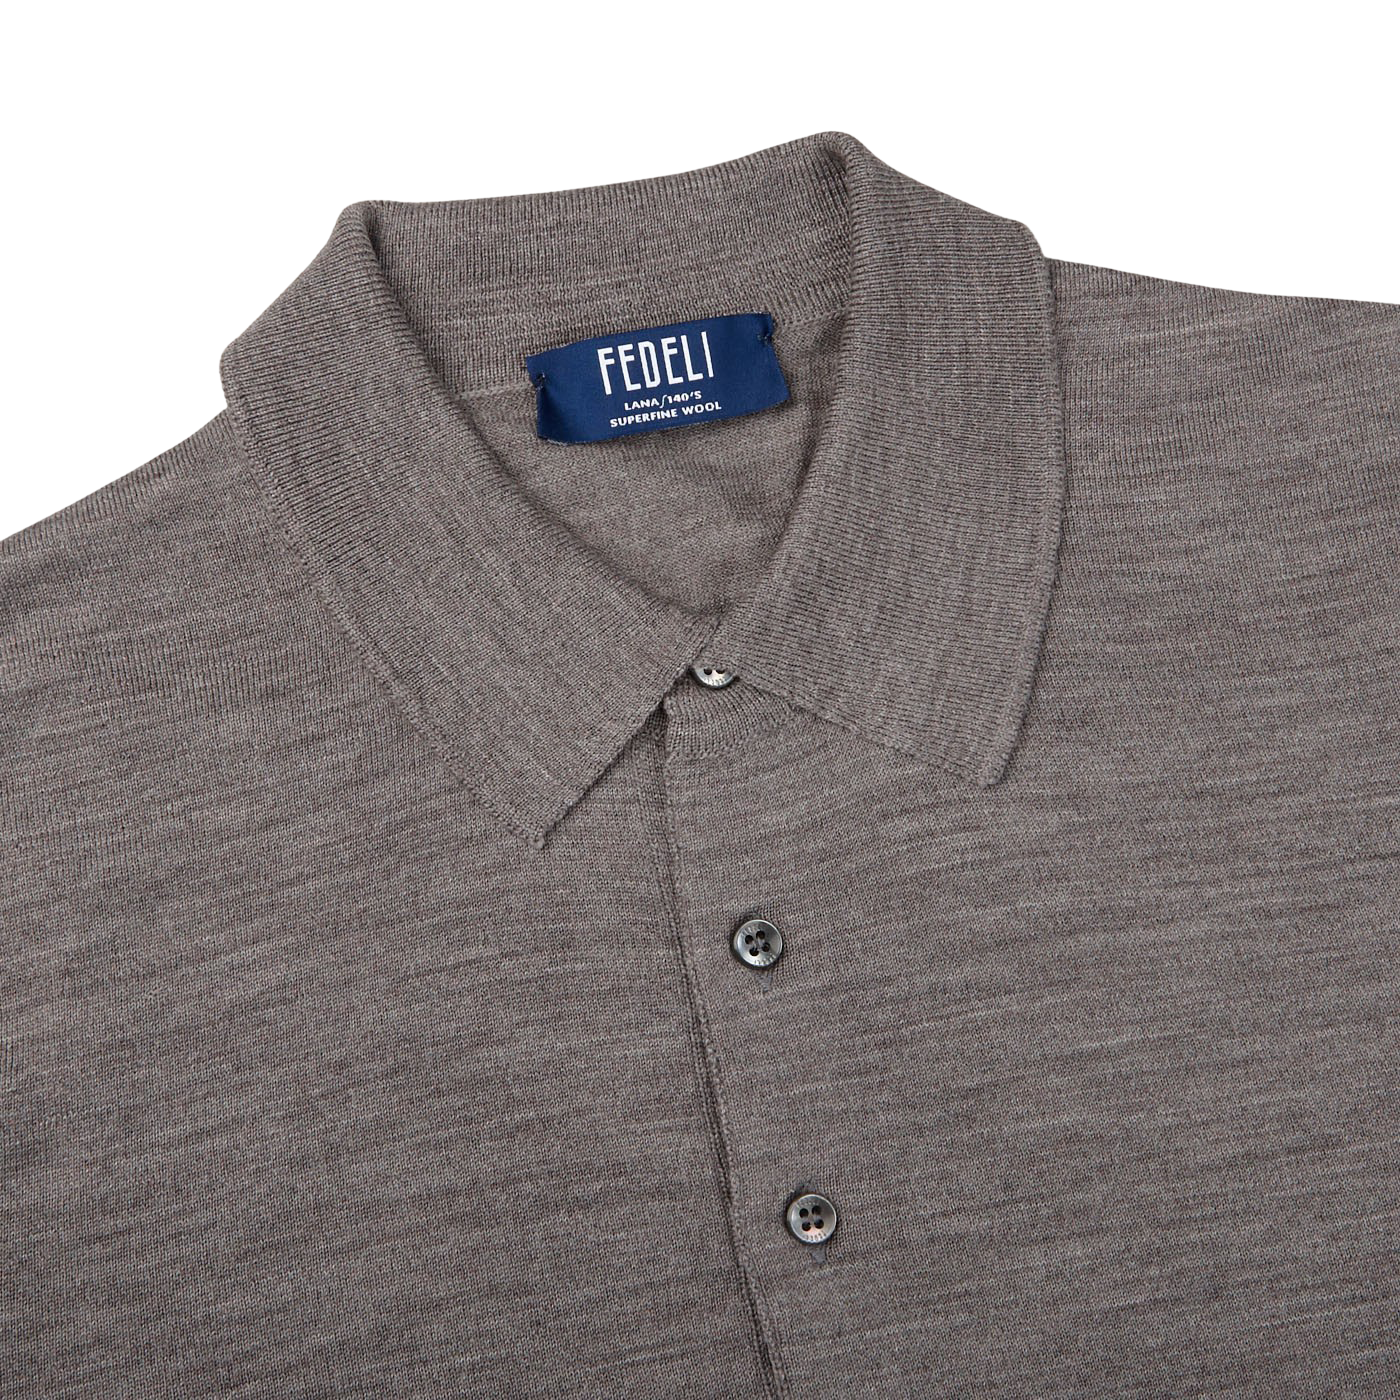 Fedeli Taupe Grey Super 140s Wool Polo Shirt Collar